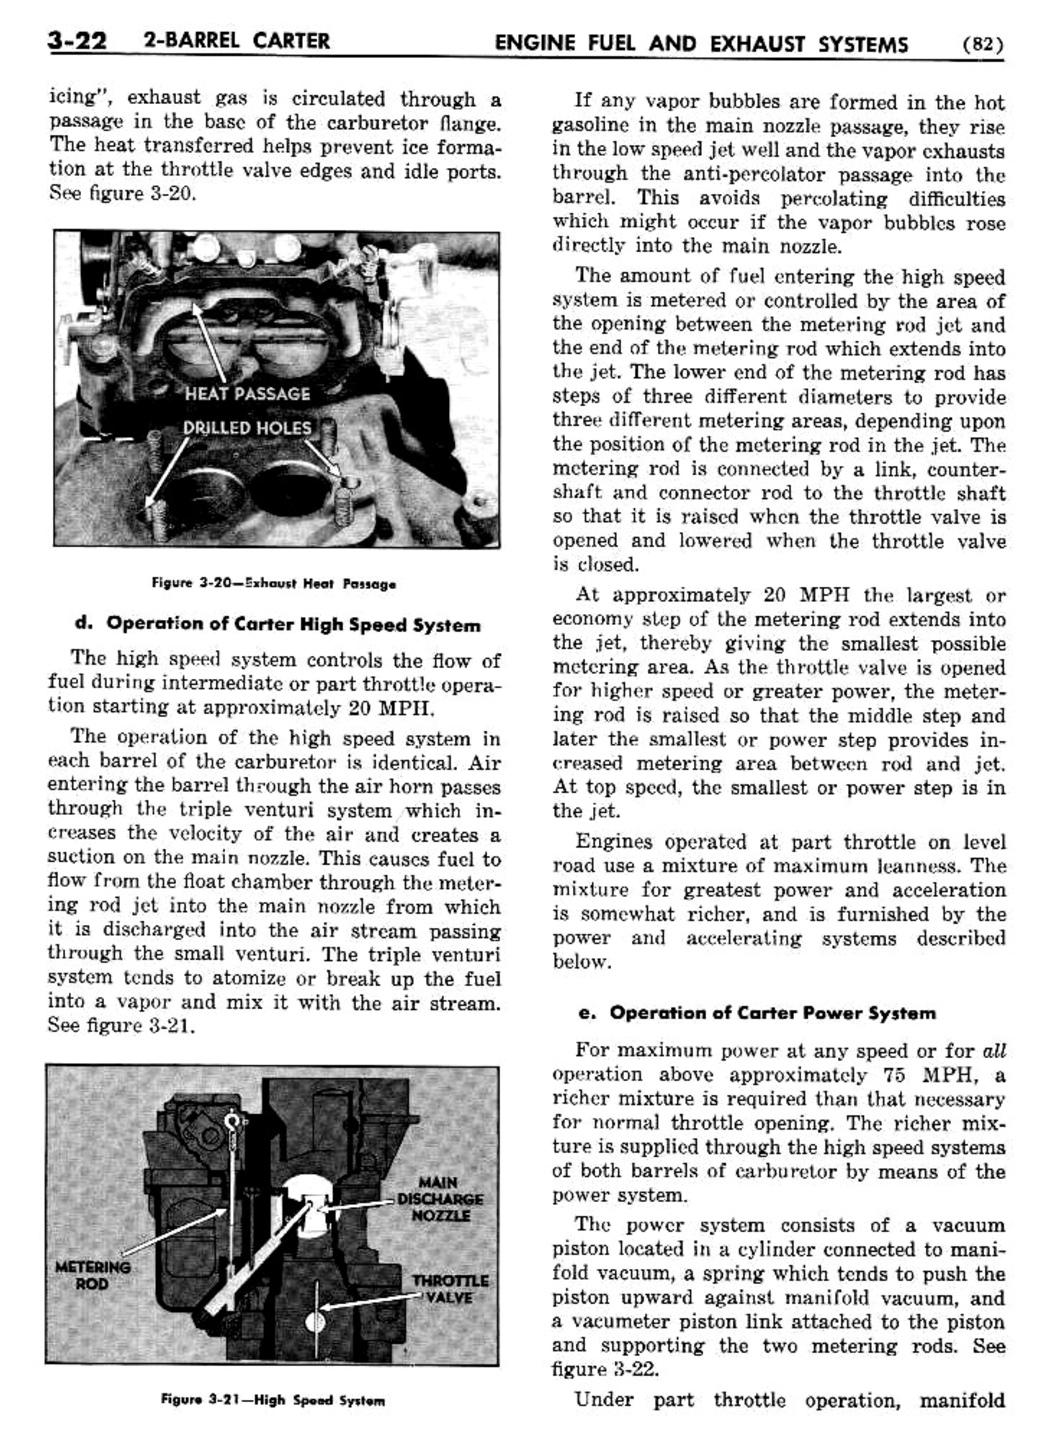 n_04 1956 Buick Shop Manual - Engine Fuel & Exhaust-022-022.jpg